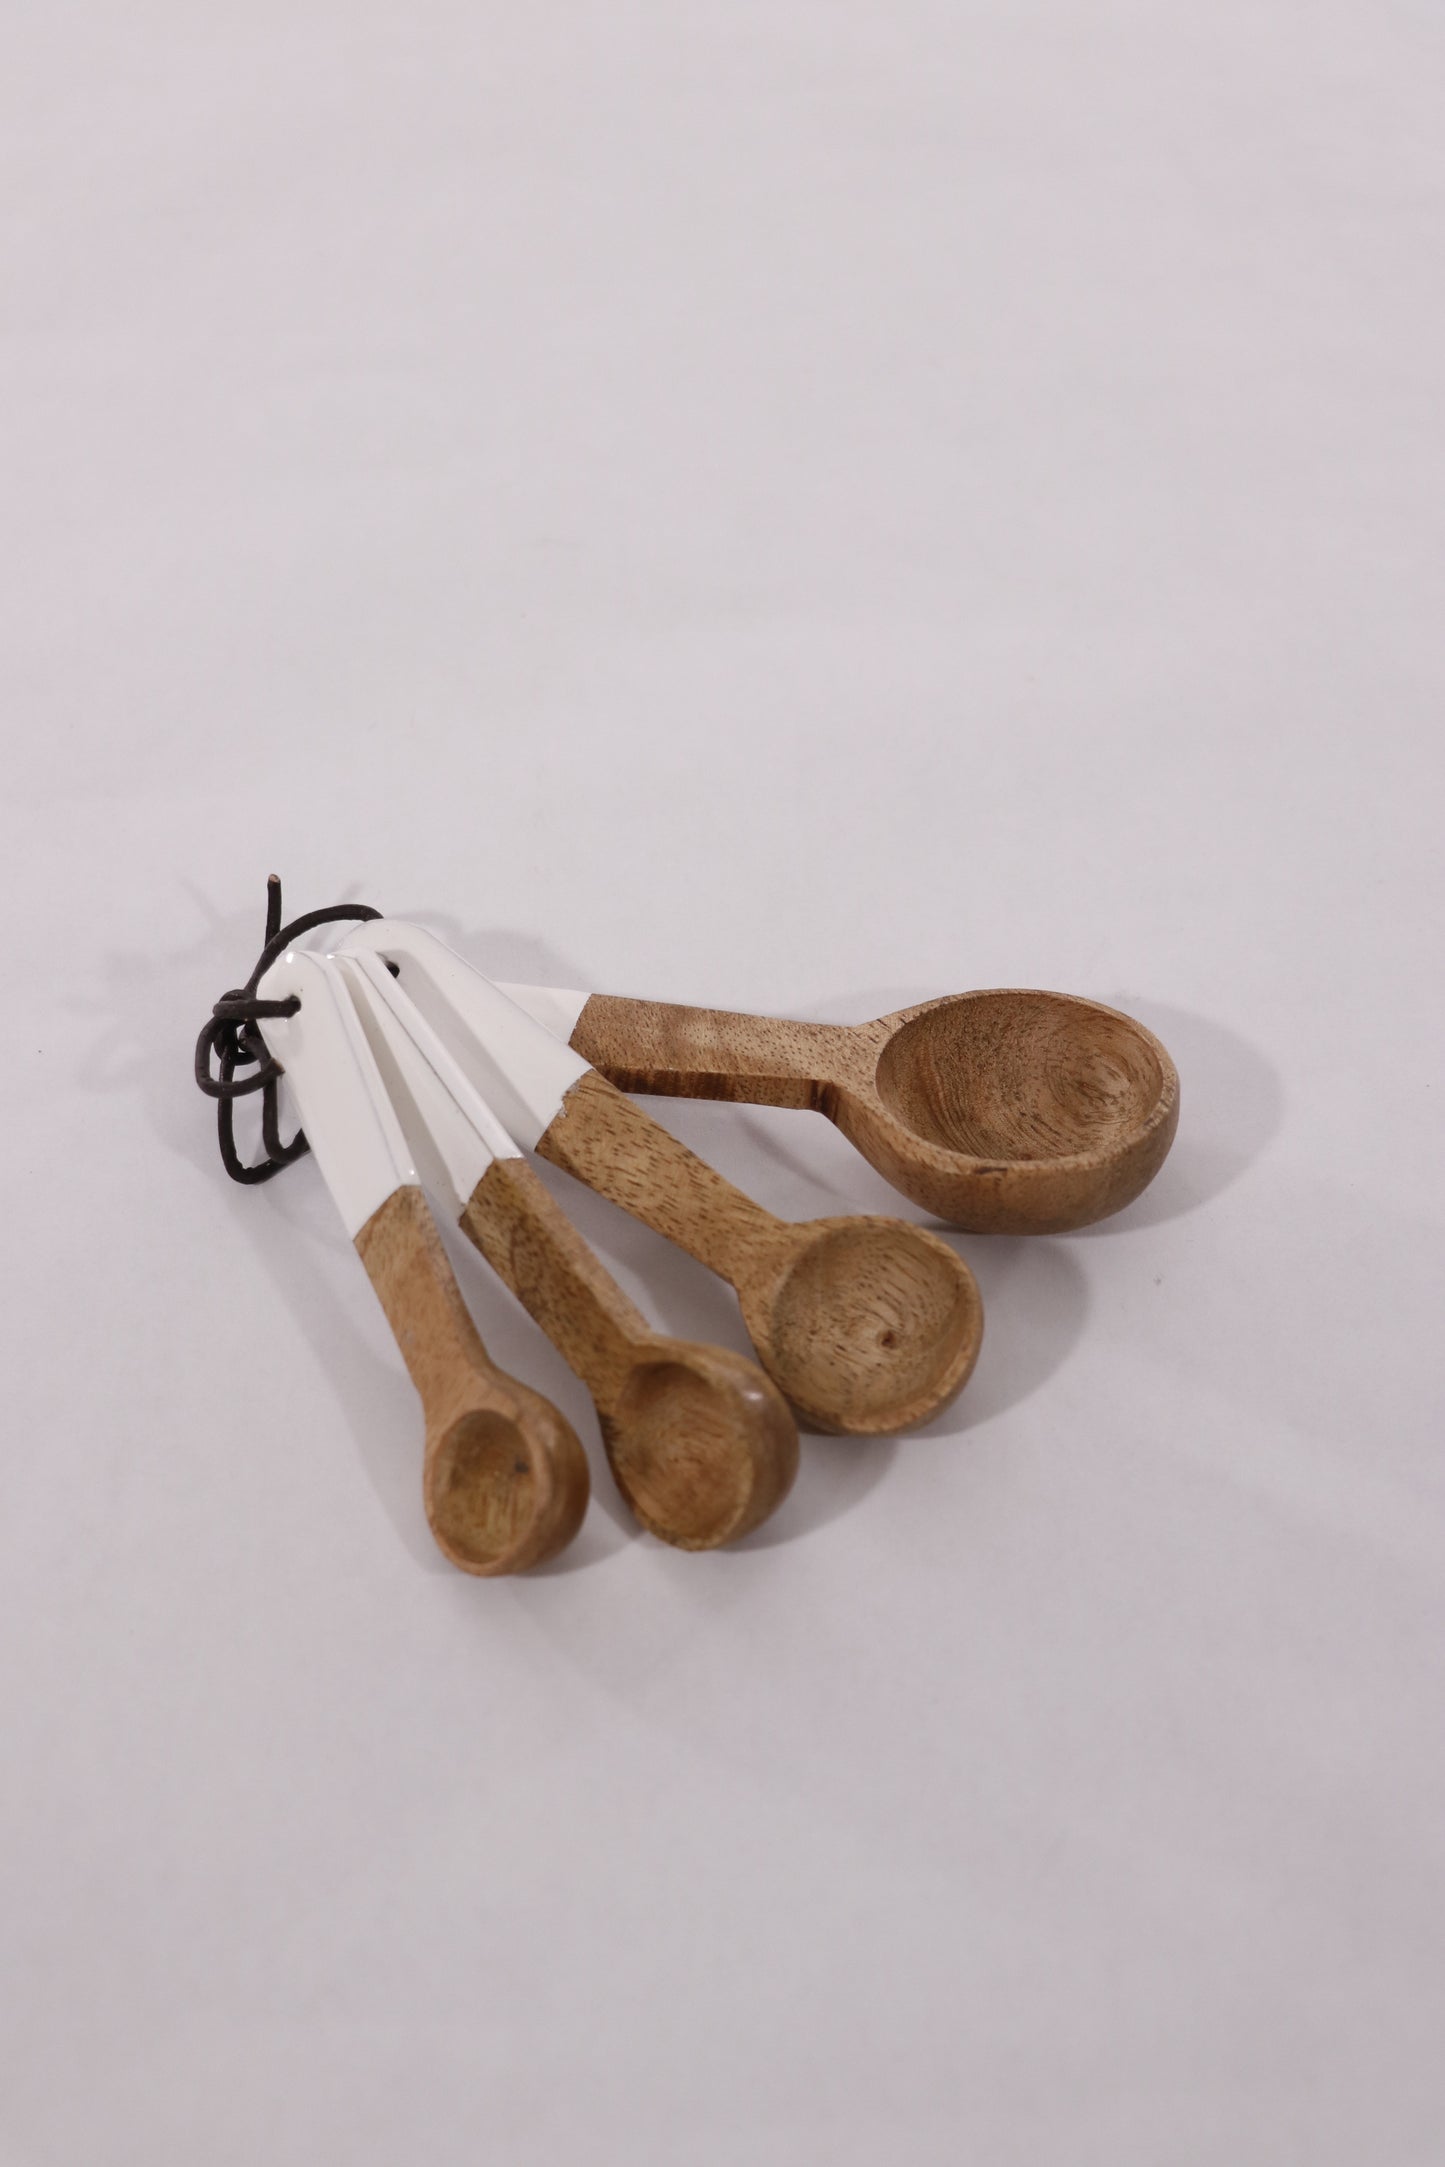 Wood and Enamel Measuring Spoons